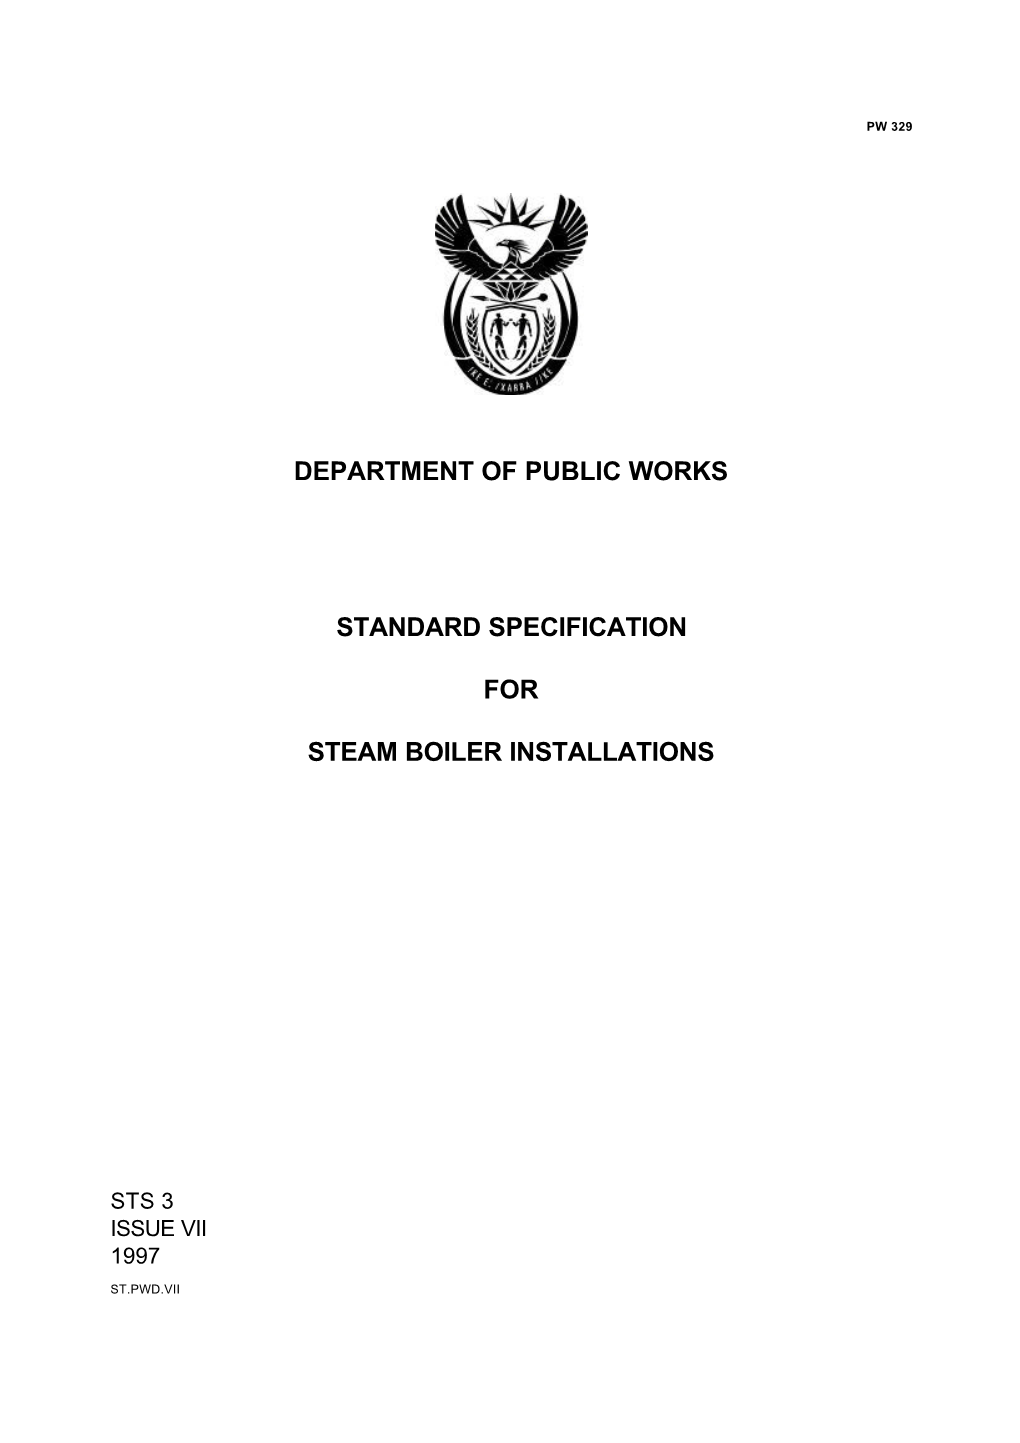 Department of Public Works Standard Specification for Steam Boiler